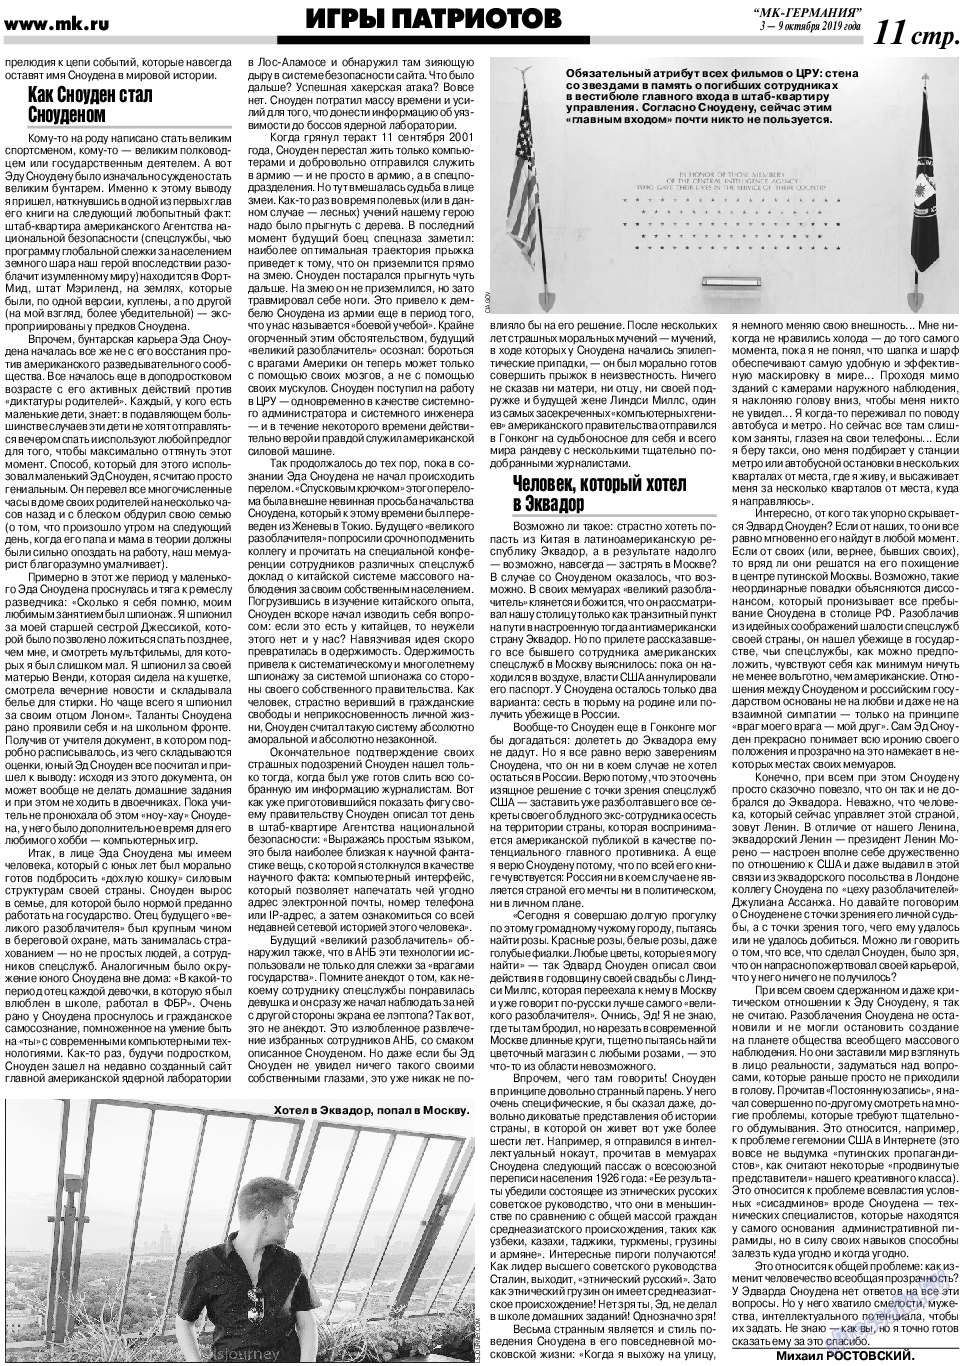 МК-Германия, газета. 2019 №41 стр.11